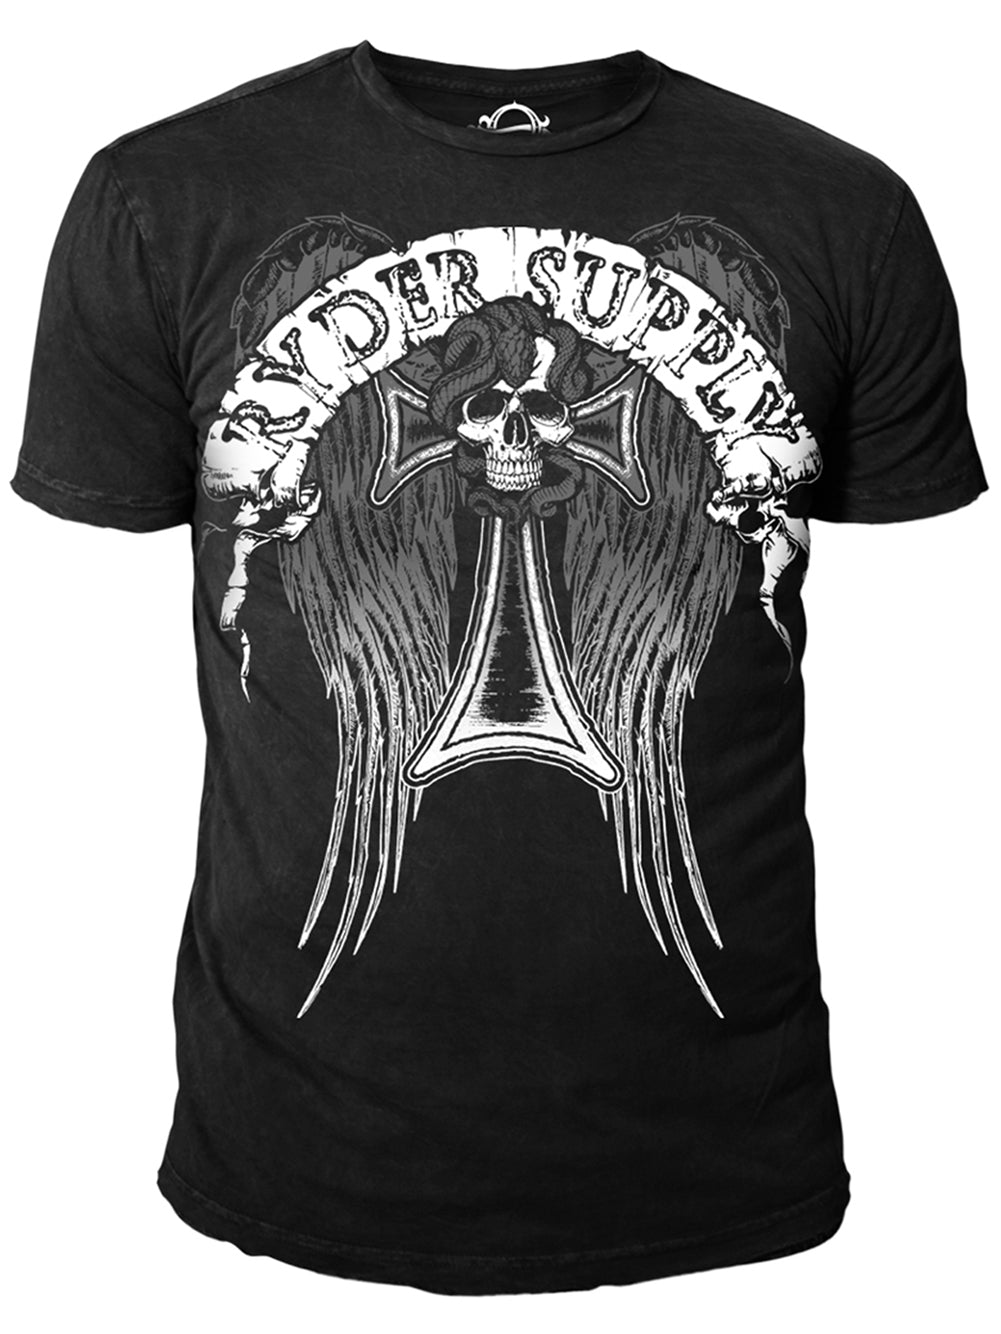 Ryder Supply Clothing - Angel Mens T-shirt (Black)